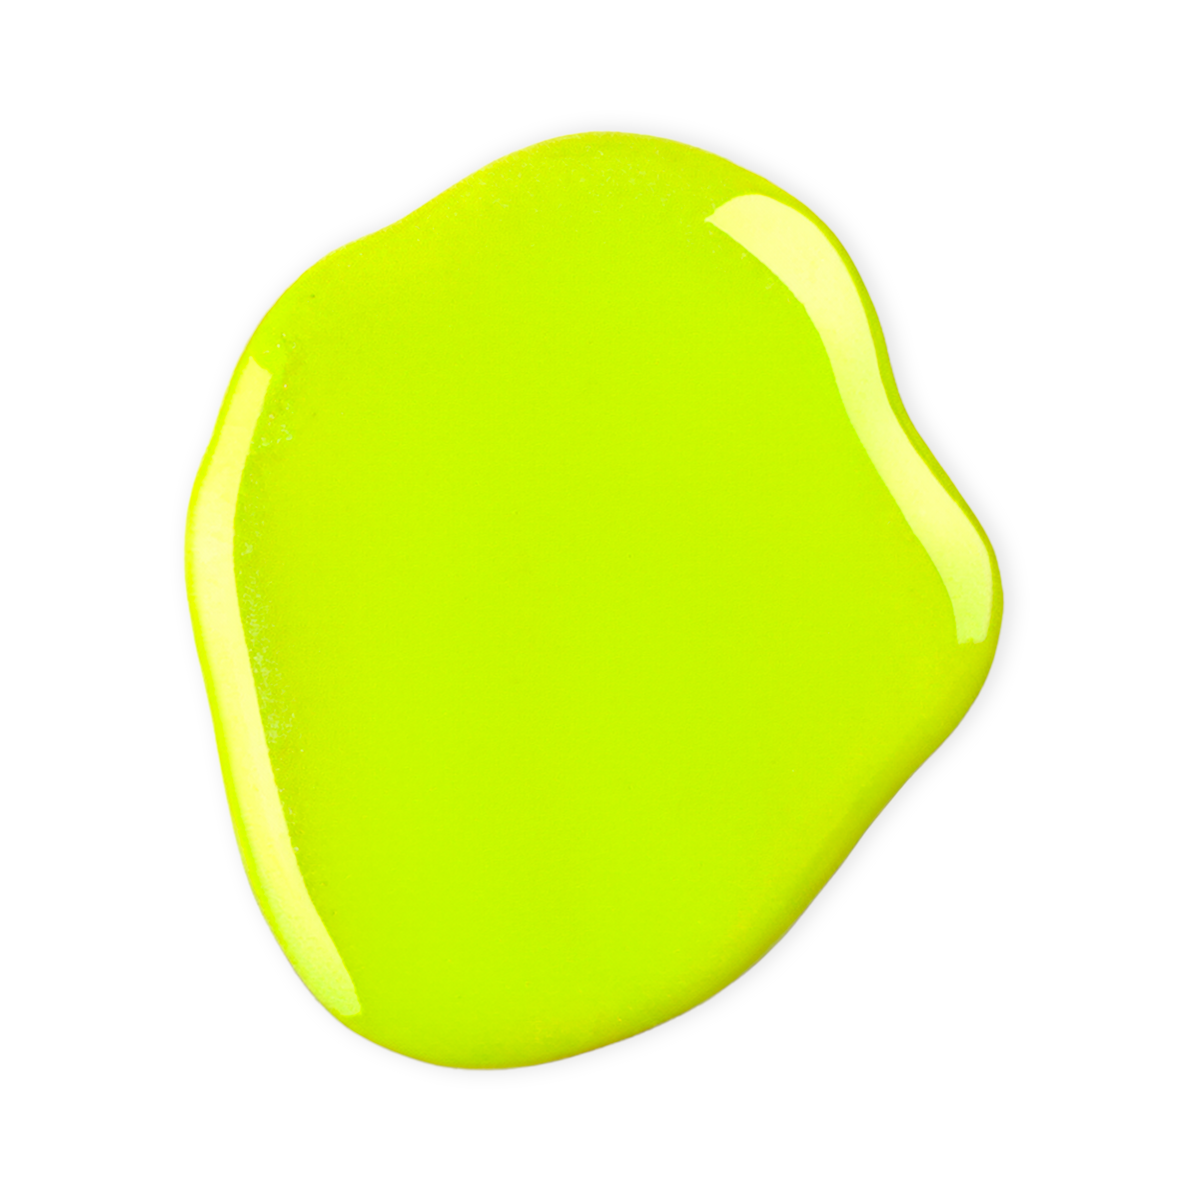 inuwet water based nail polish - fluoro yellow pineapple